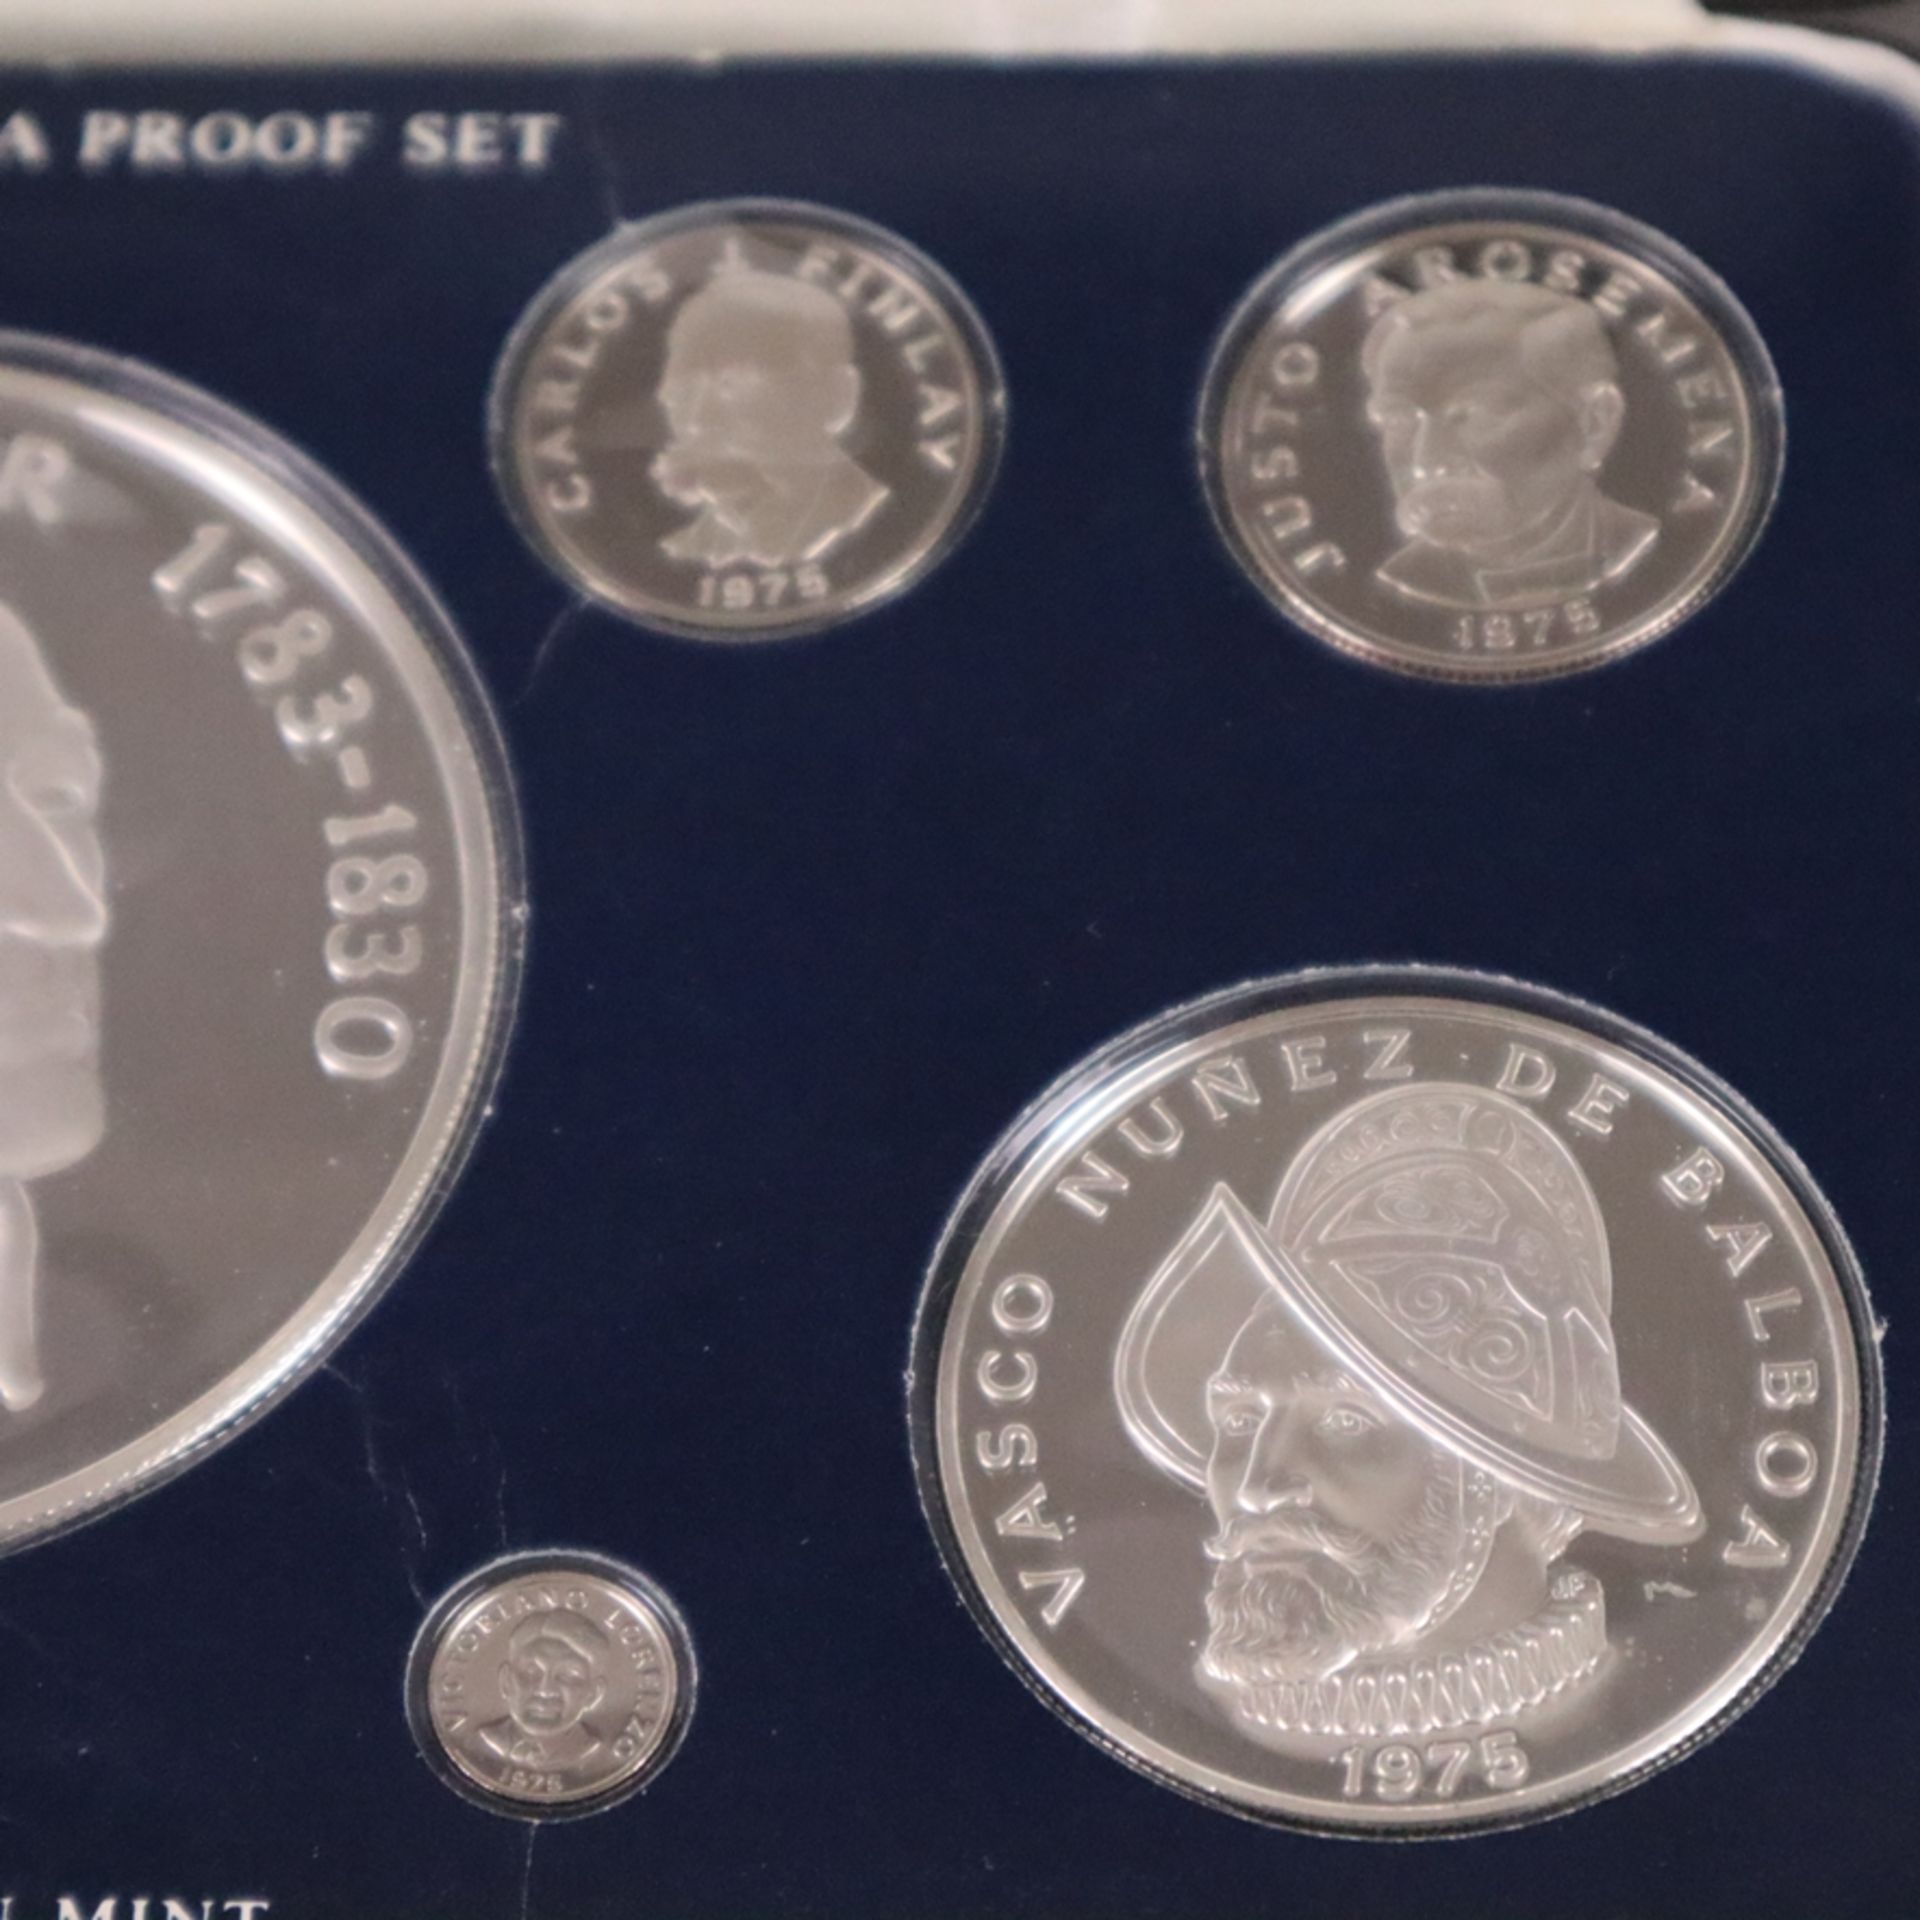 Münzset Republik of Panama 1975 - 925er Silber, Republik Of Panama Proof Set, Franklin Mint, 9 Münz - Bild 4 aus 5